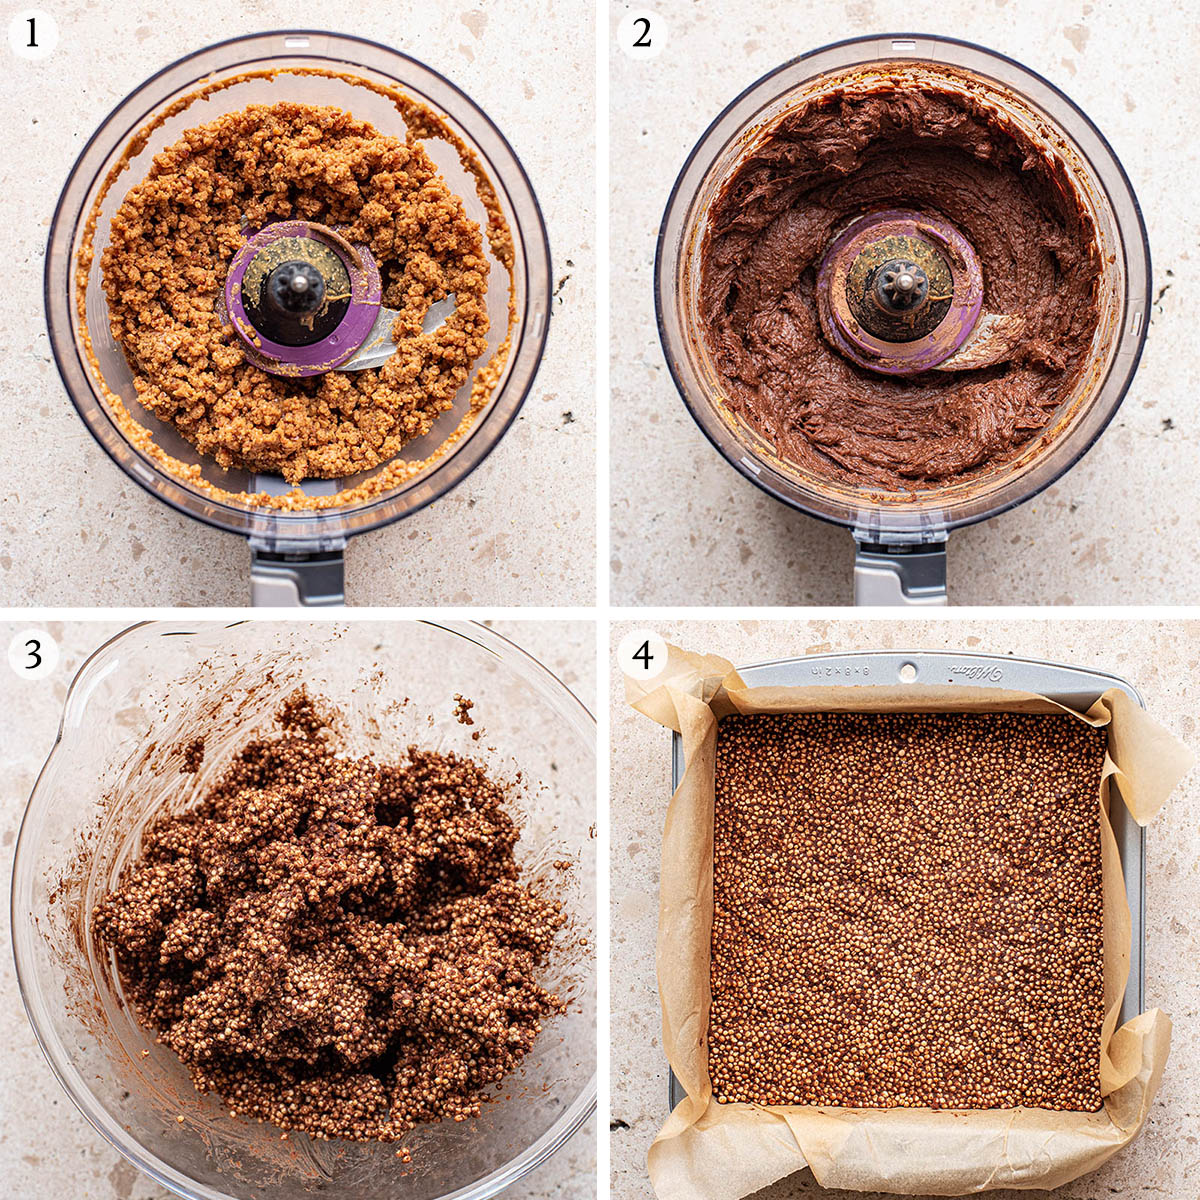 Puffed quinoa bars steps 1 to 4.